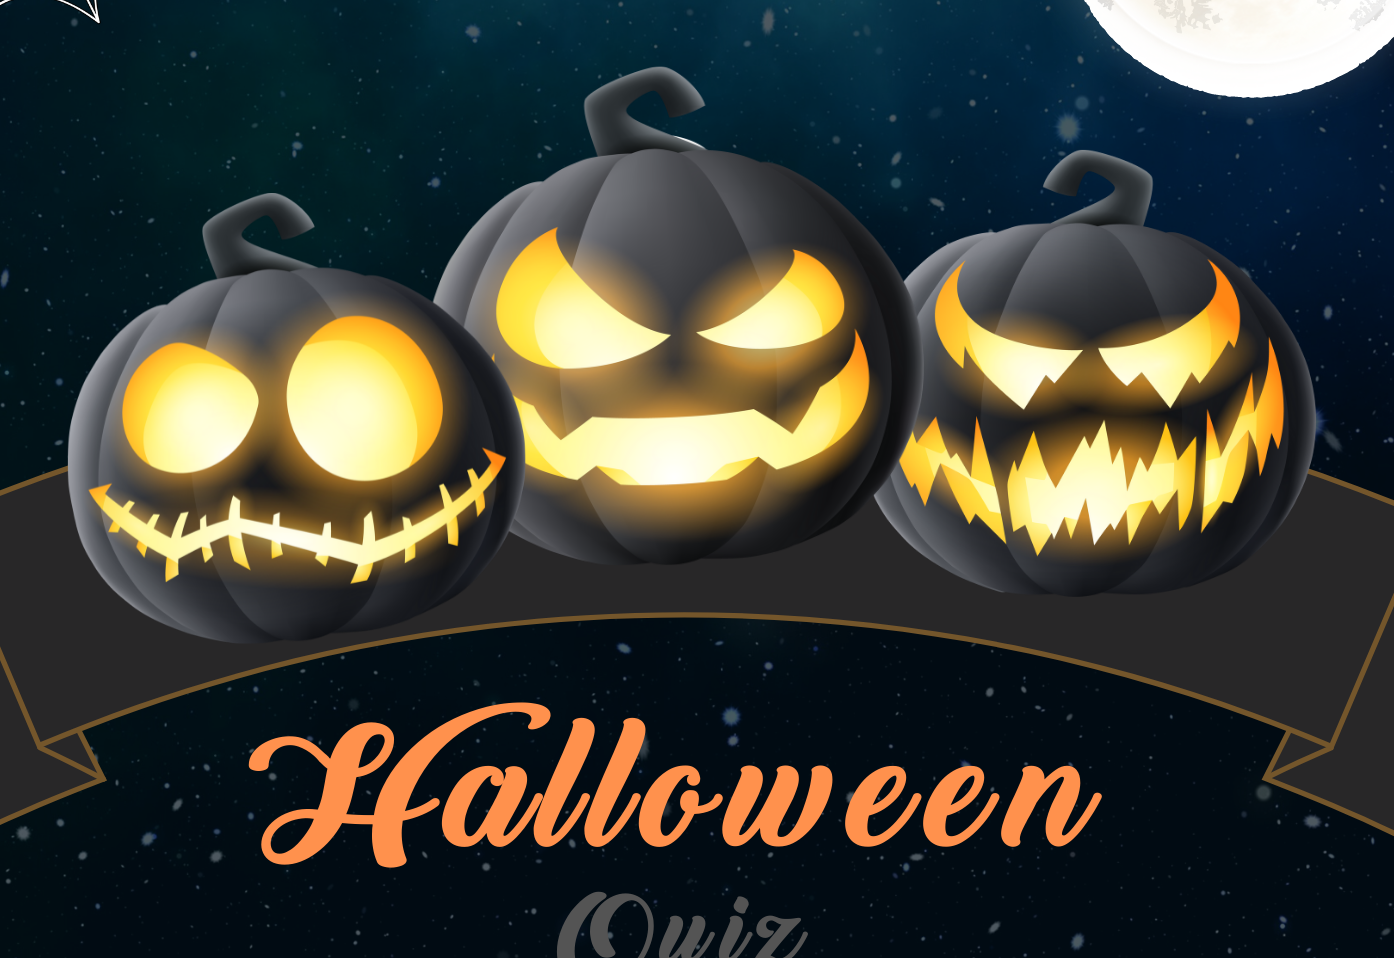 Halloween Quiz Winners Announced